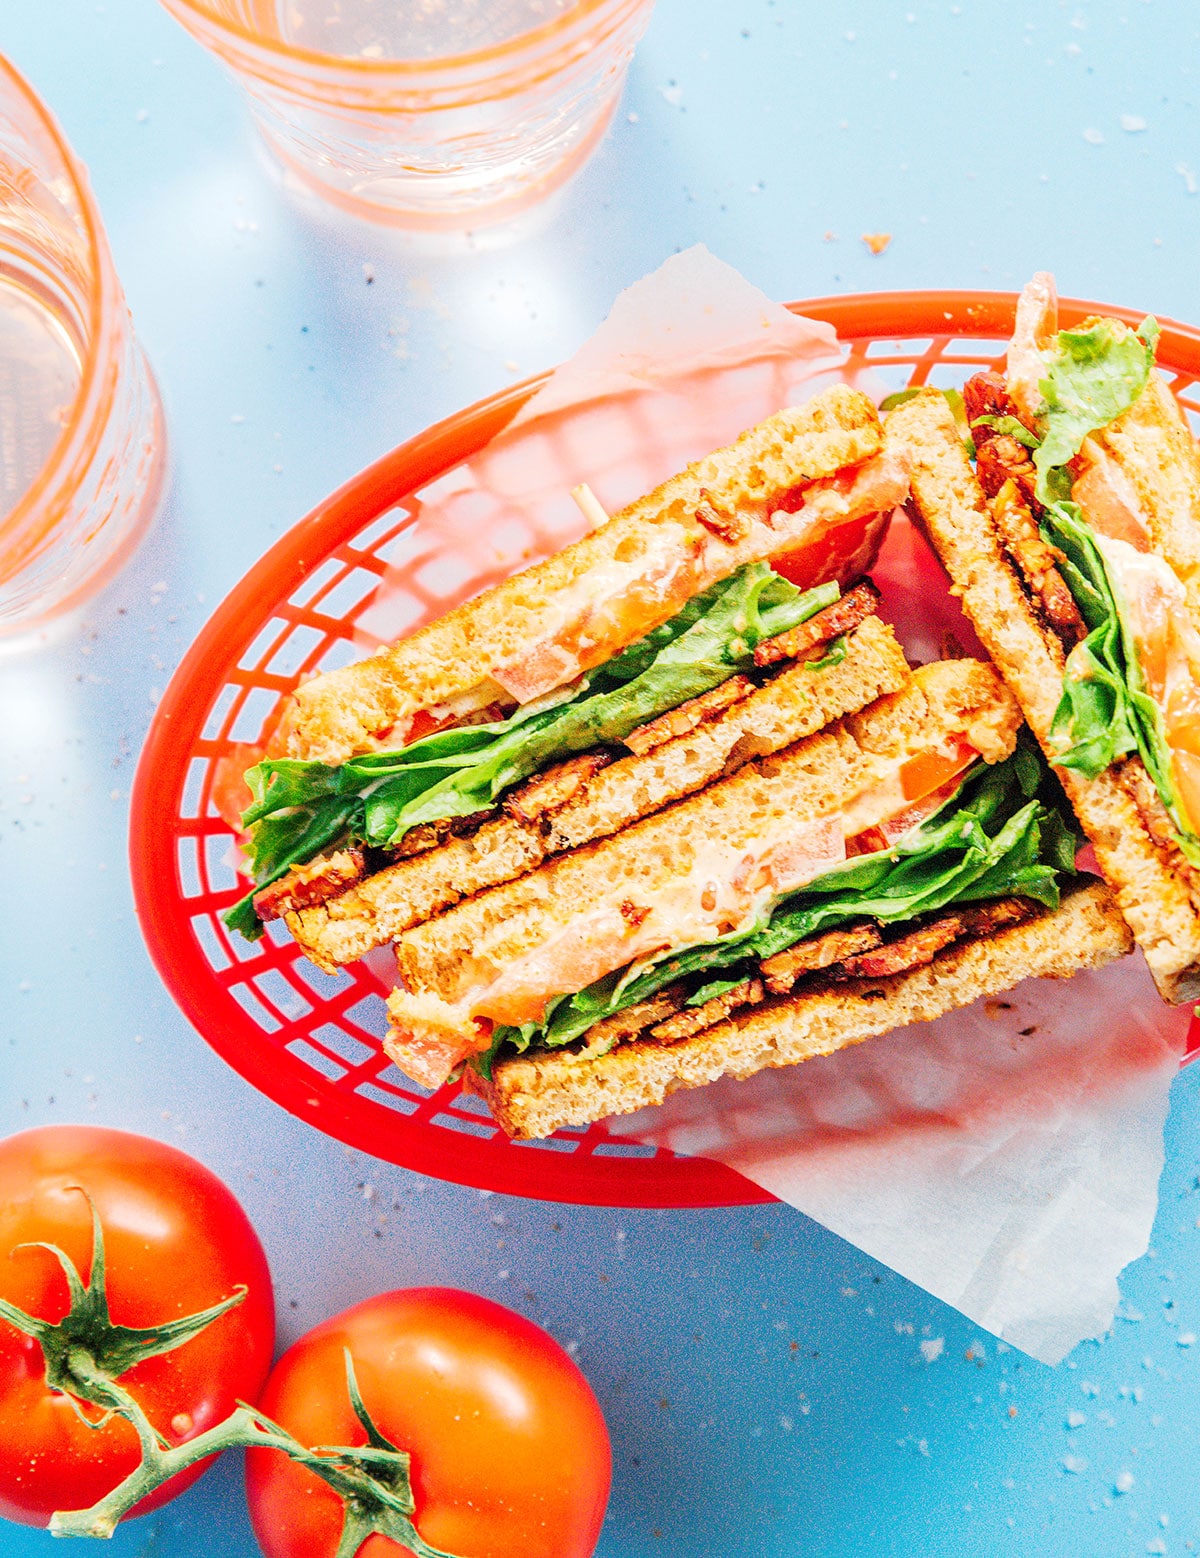 Three vegan BLT sandwich halves in a red plastic basket.